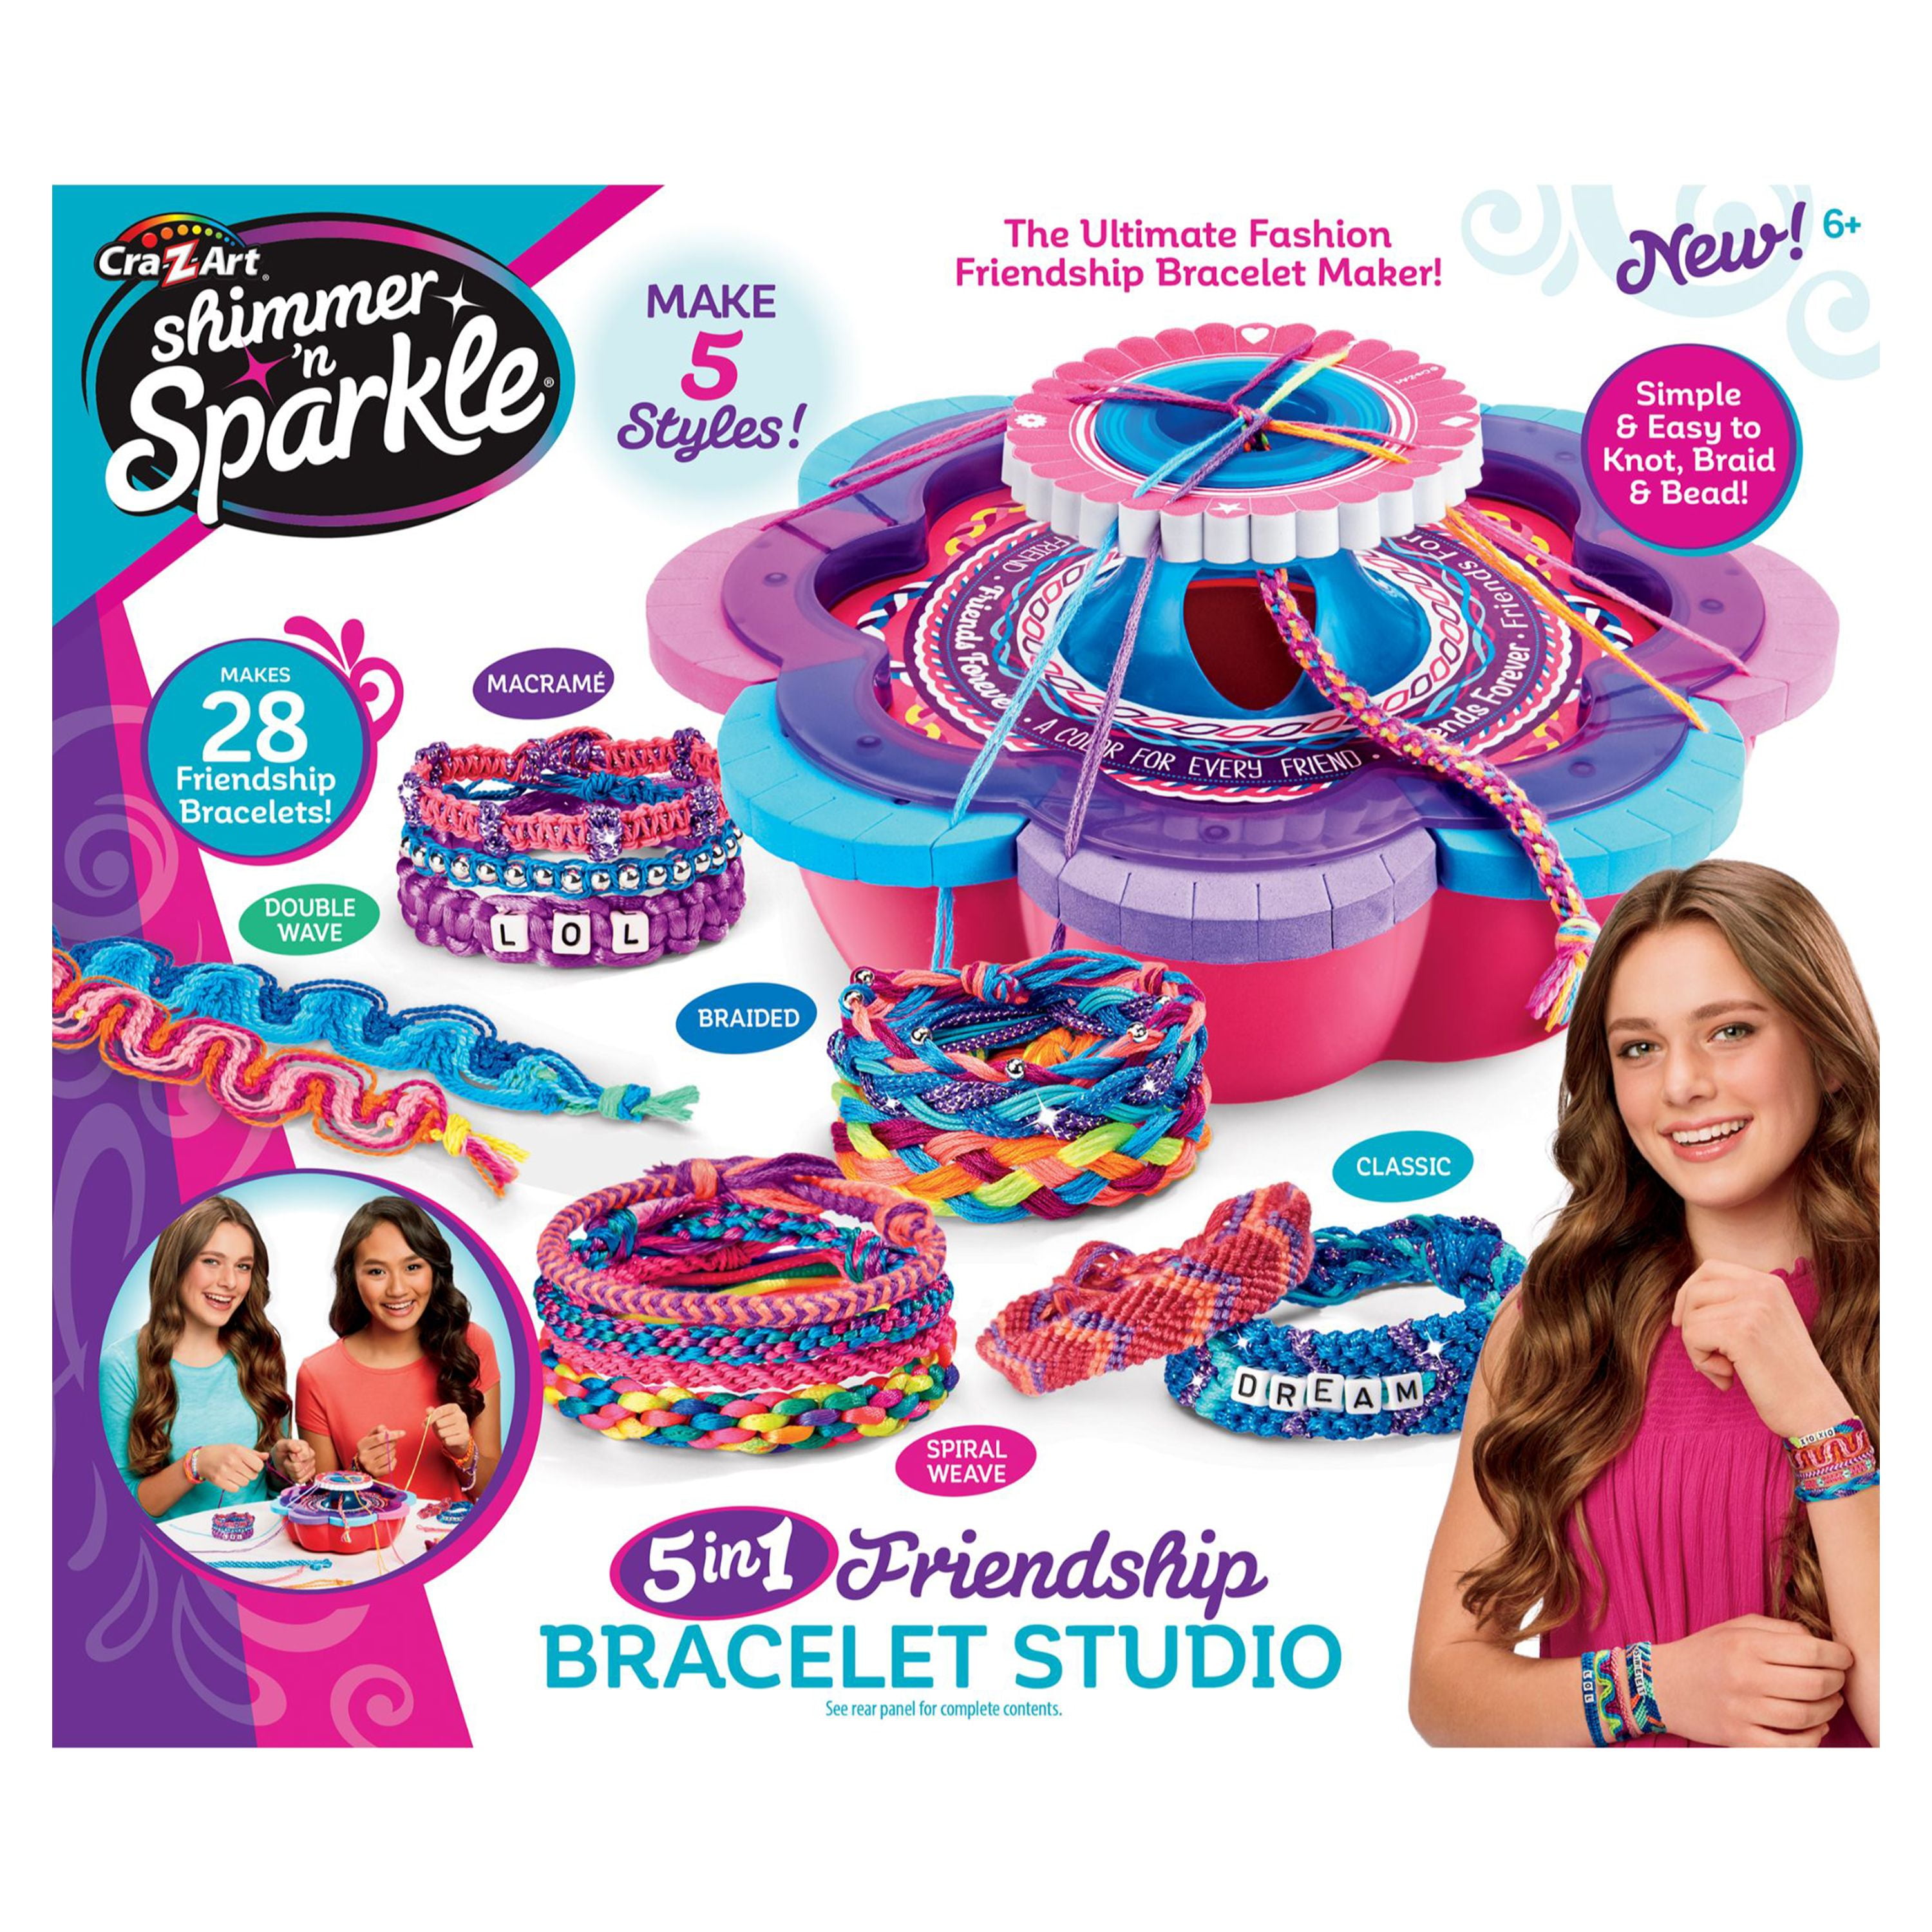 Ultimate friends maker. Браслет мэйкер новое. Shimmer’n Sparkle 5 in 1 Friendship Bracelet Studio от Cra-z-Art купить. Twist n Sparkle. CRAZART Shimmer Sparkle инструкция.